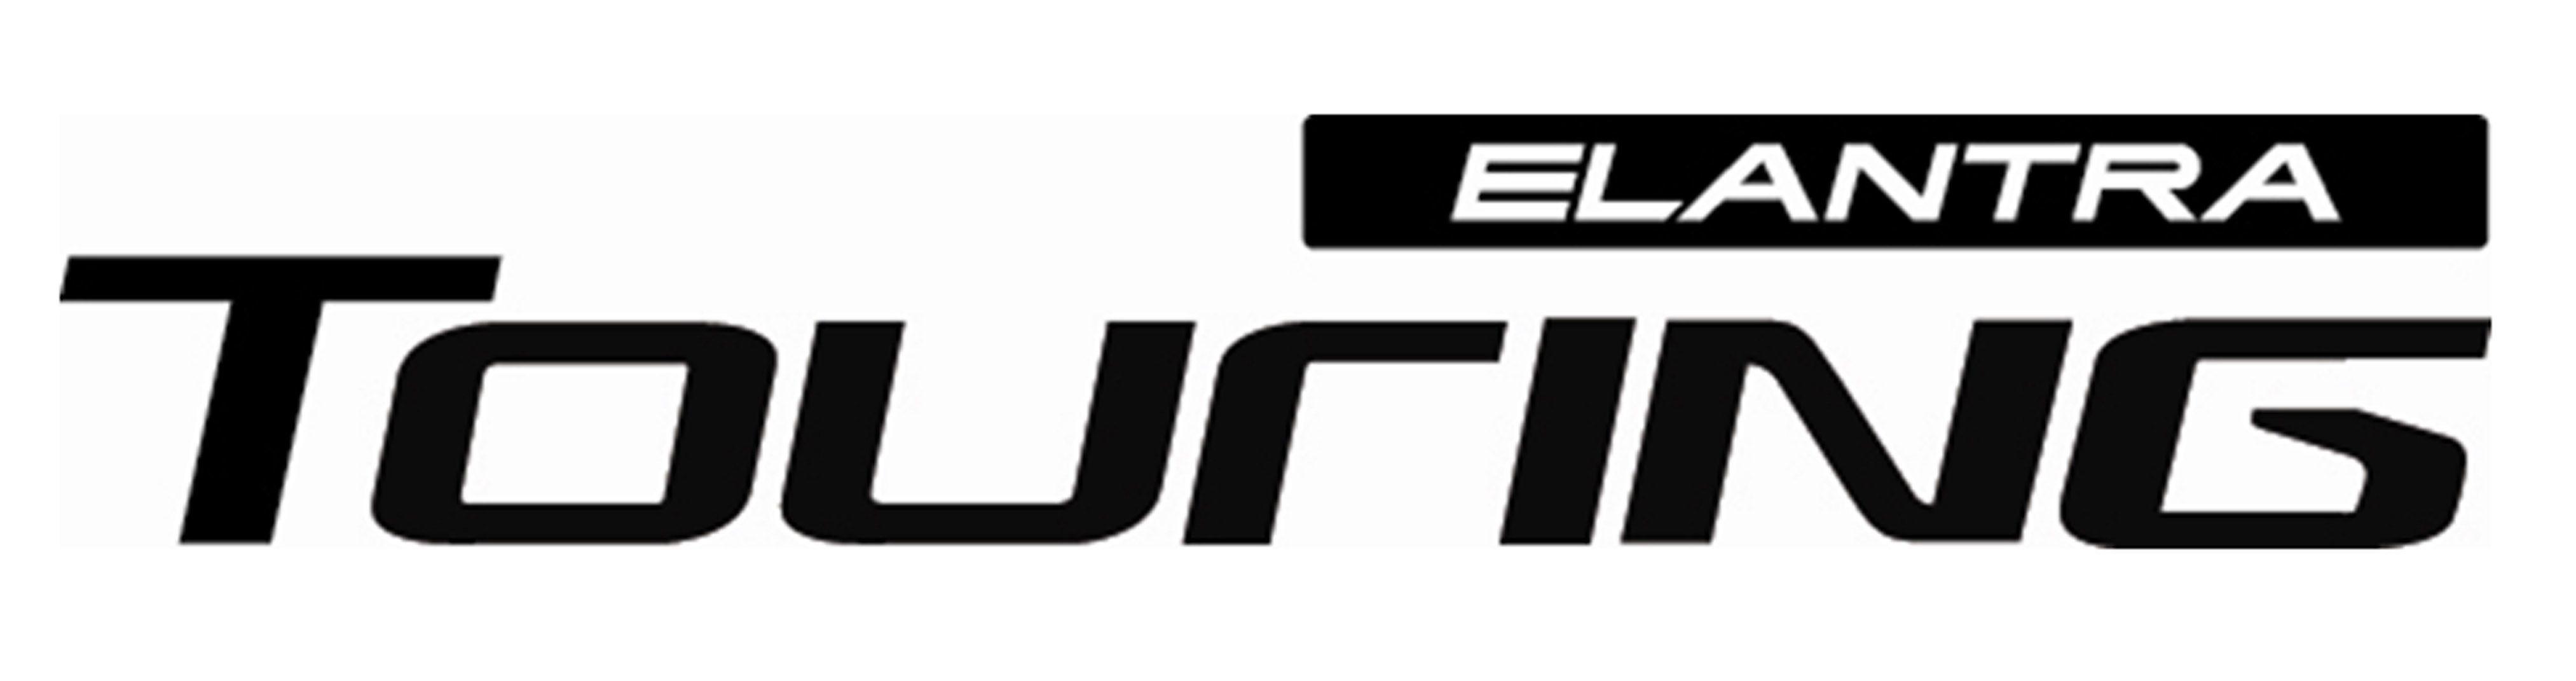 Touring Logo - Hyundai related emblems | Cartype